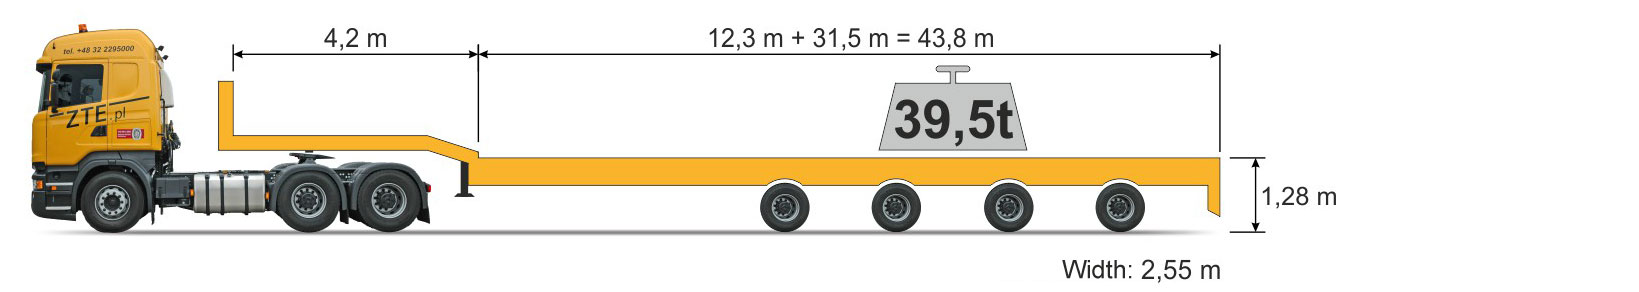 48m Semi Tele semi-trailer